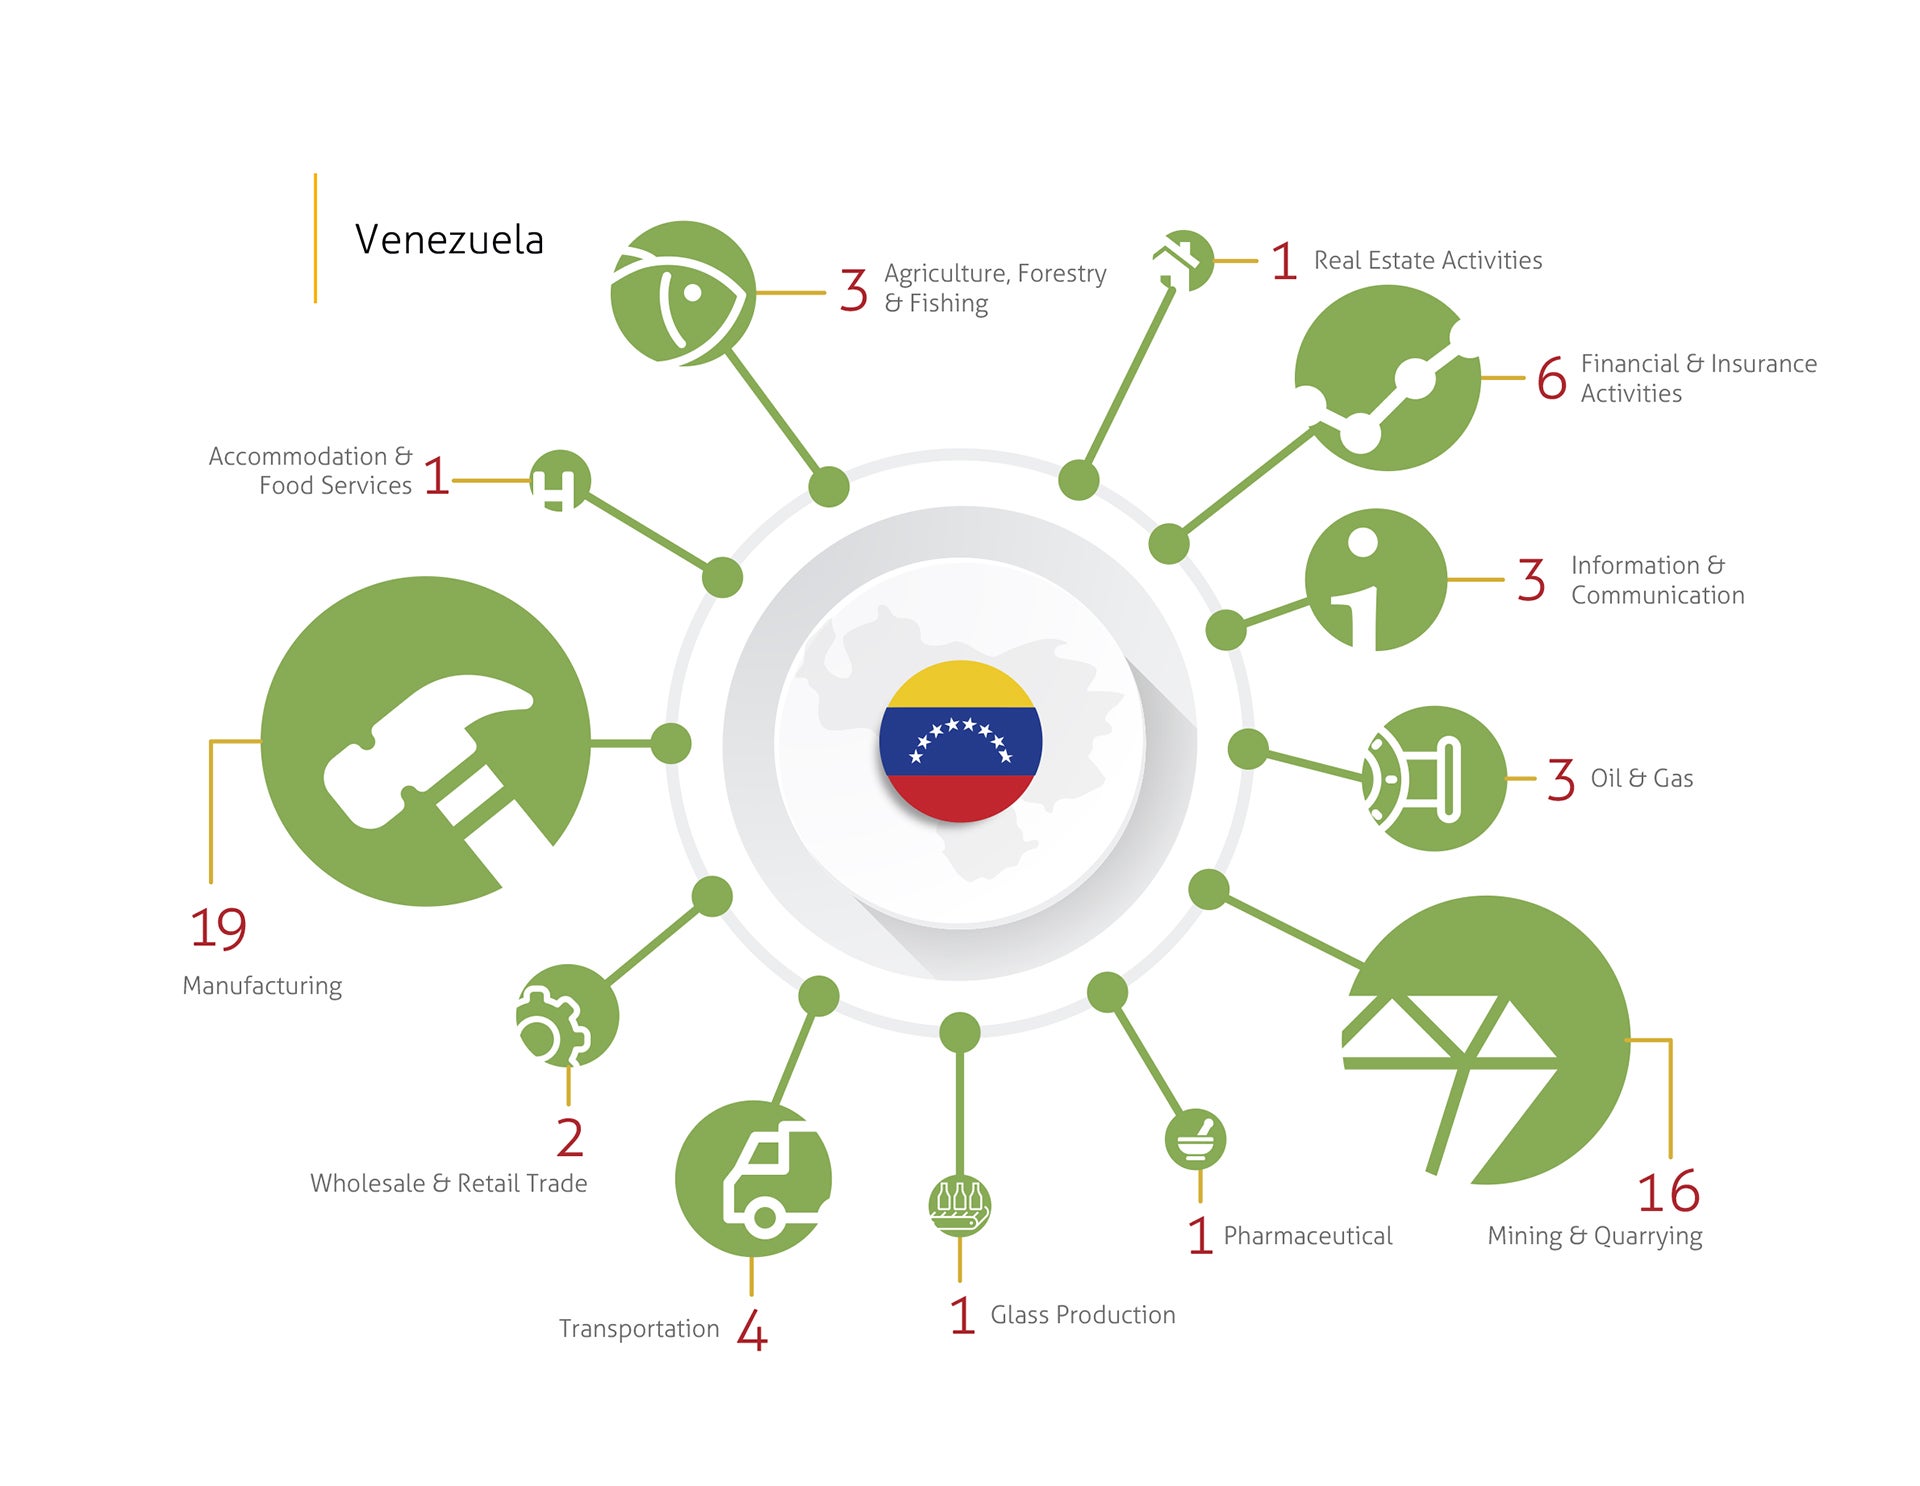 Industries involved in disputes - Venezuela